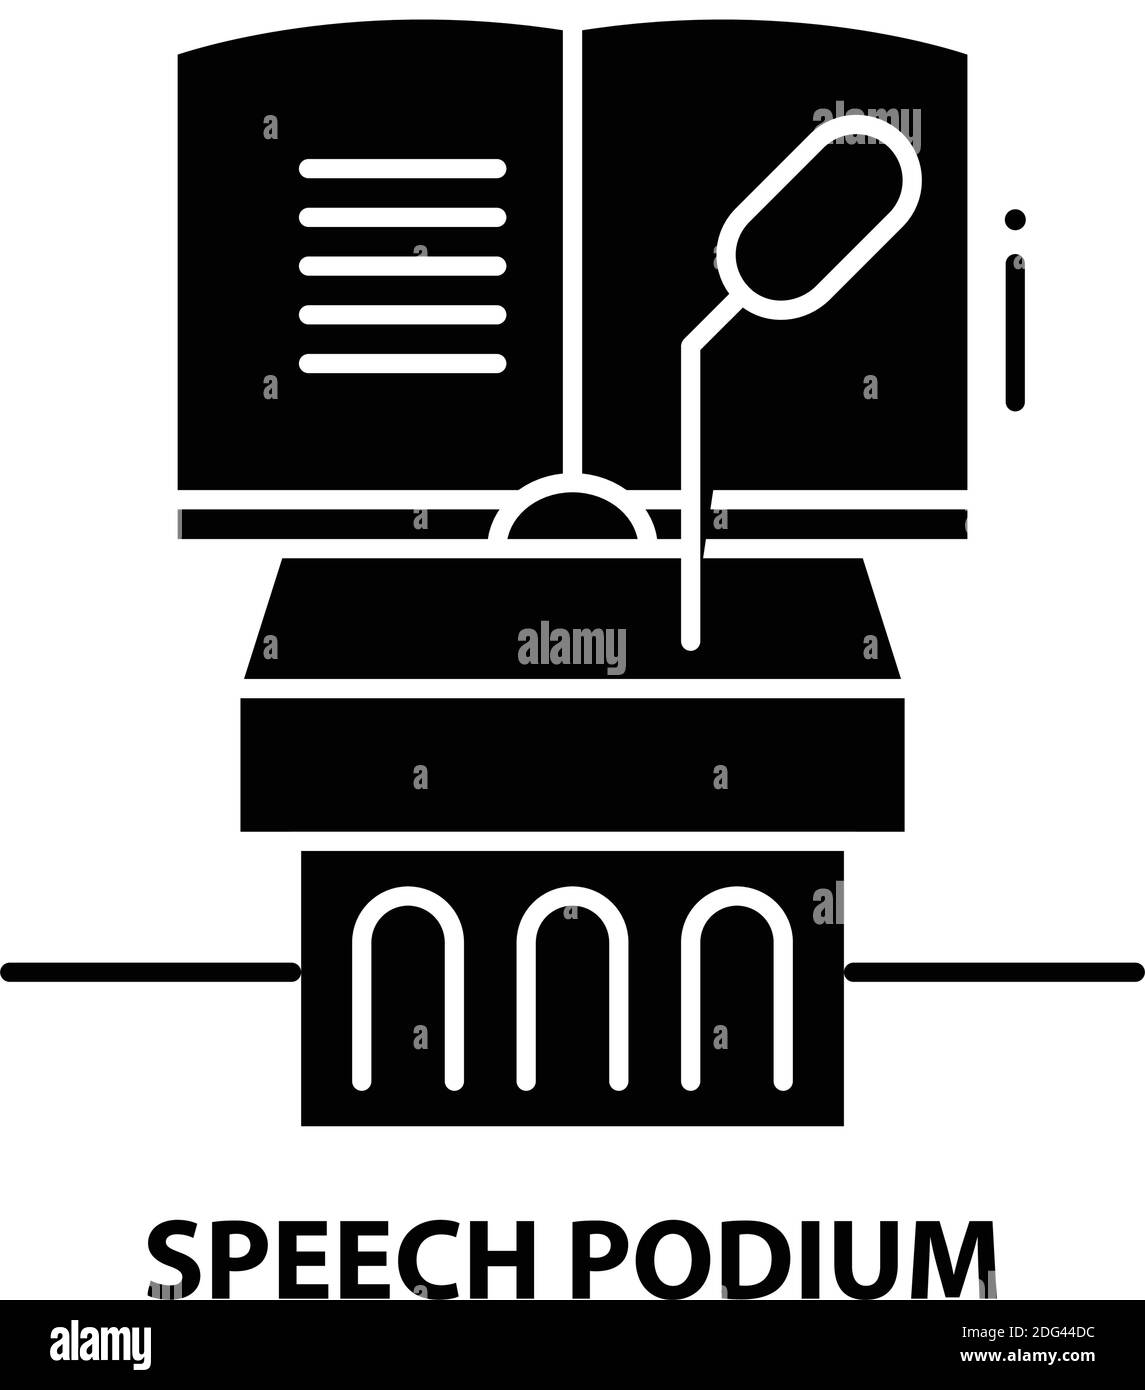 speech podium icon, black vector sign with editable strokes, concept illustration Stock Vector